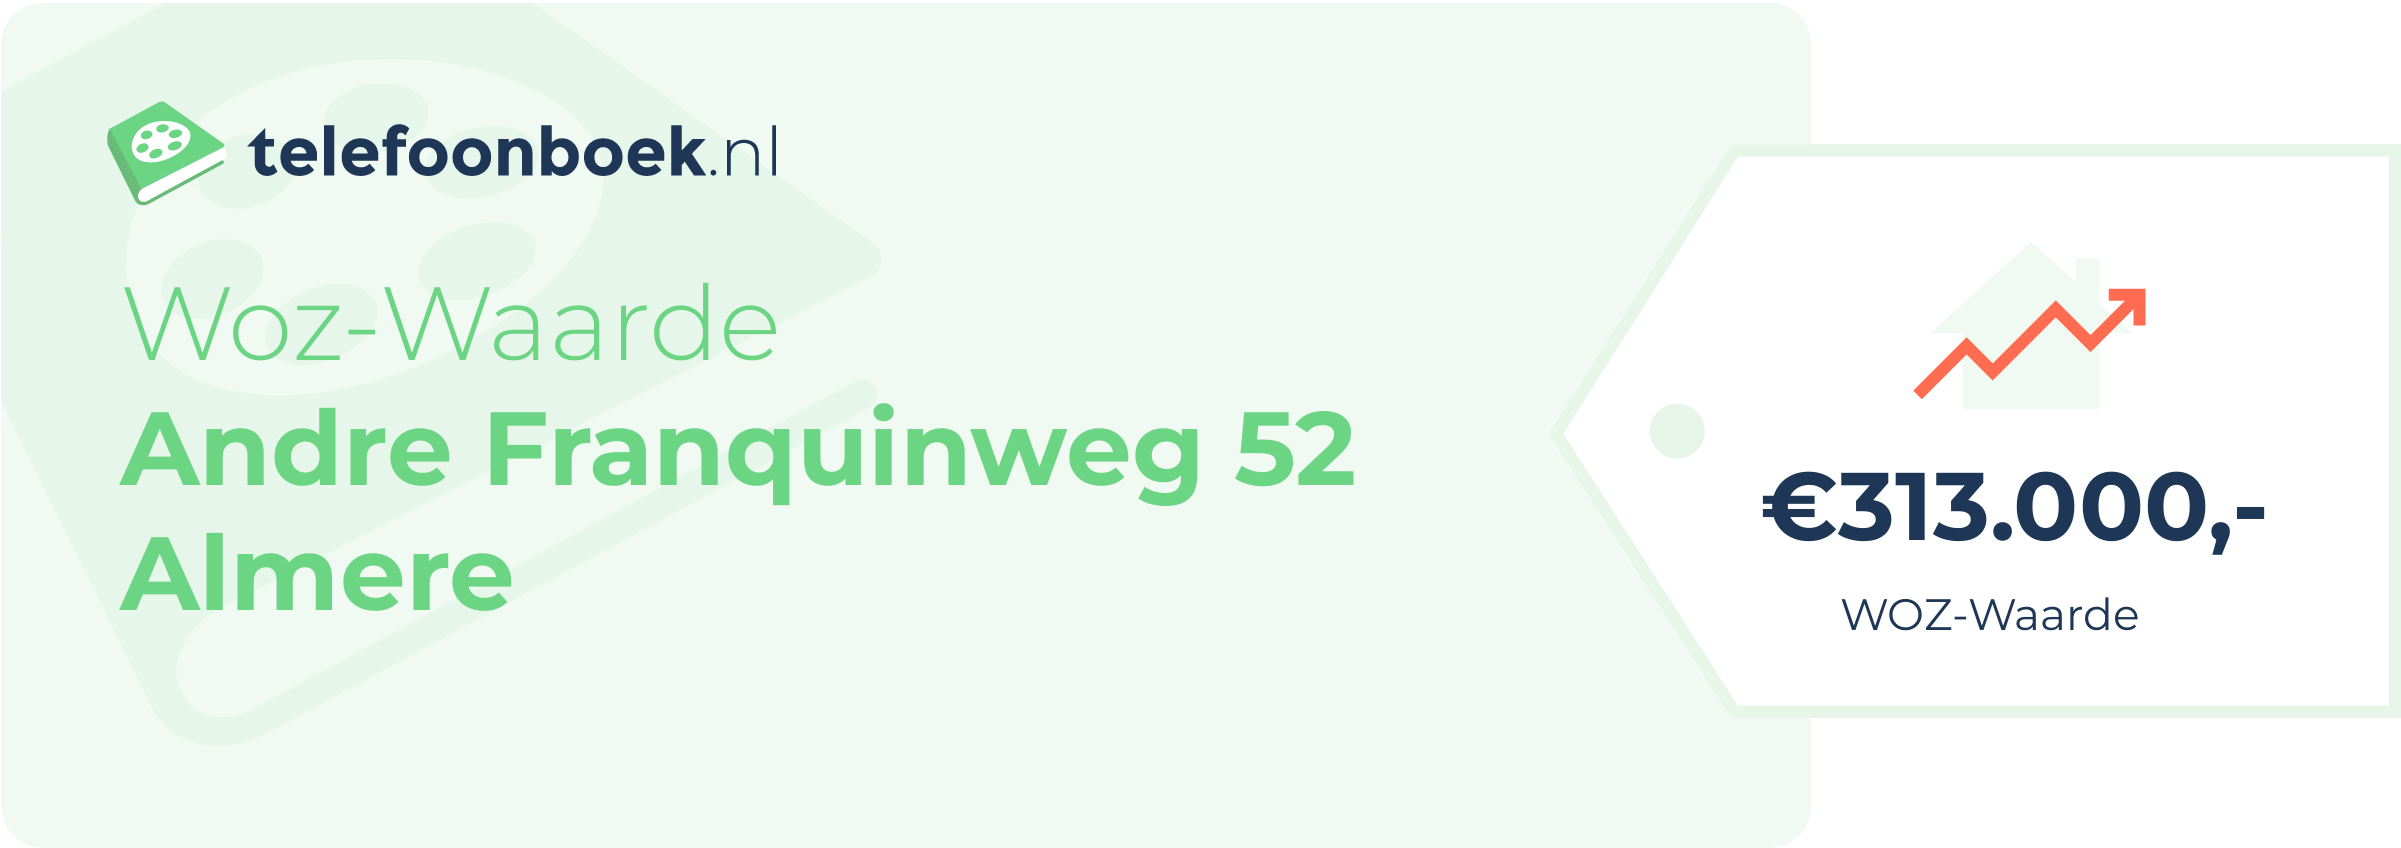 WOZ-waarde Andre Franquinweg 52 Almere